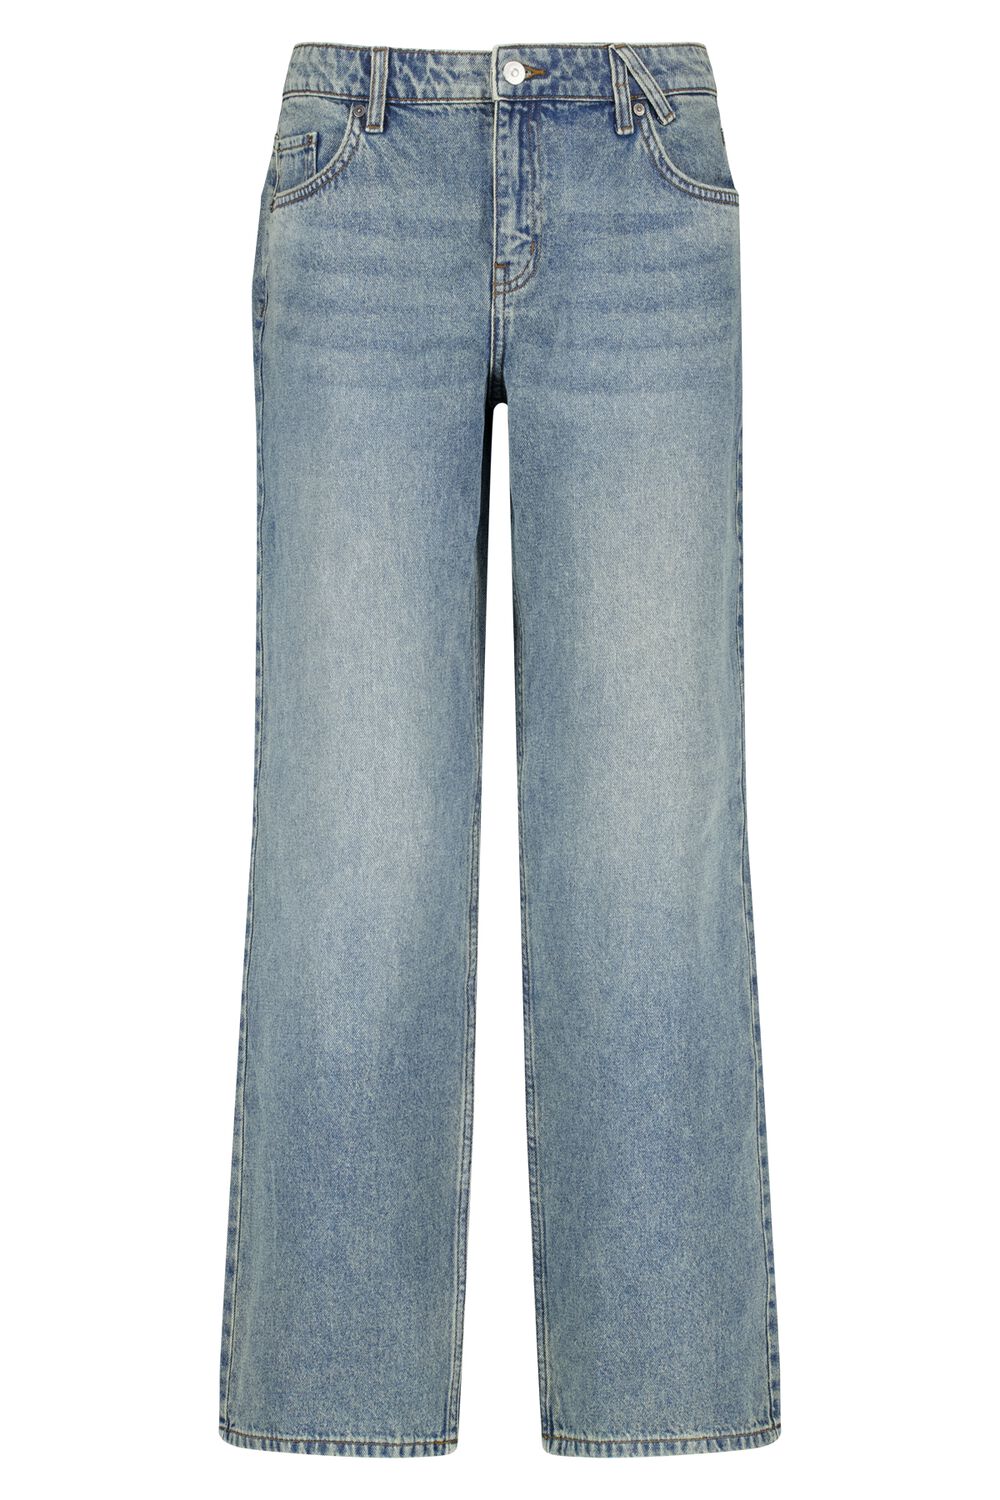 America Today Dames Jeans Montana Blauw